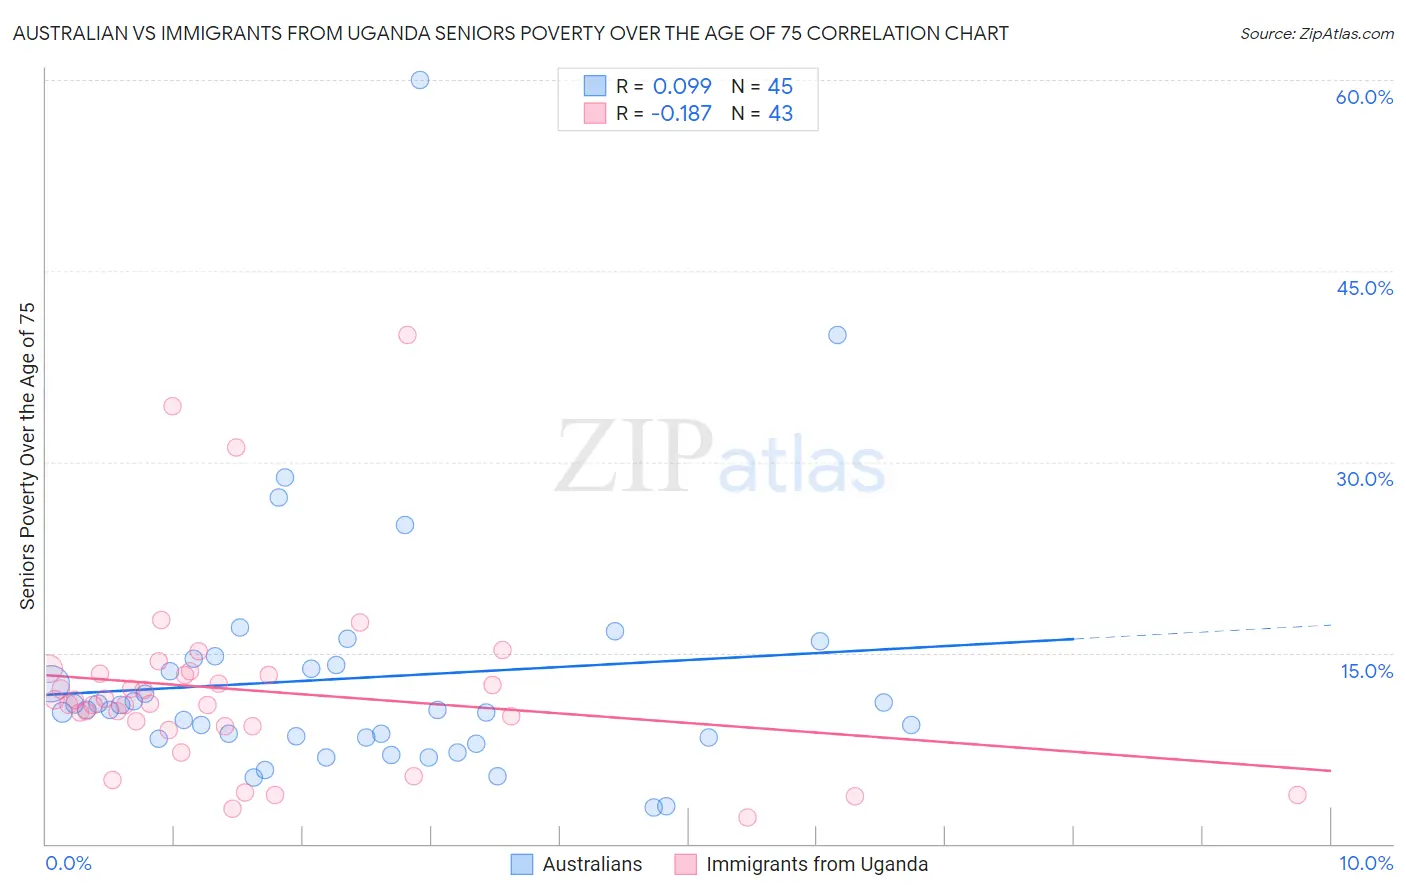 Australian vs Immigrants from Uganda Seniors Poverty Over the Age of 75